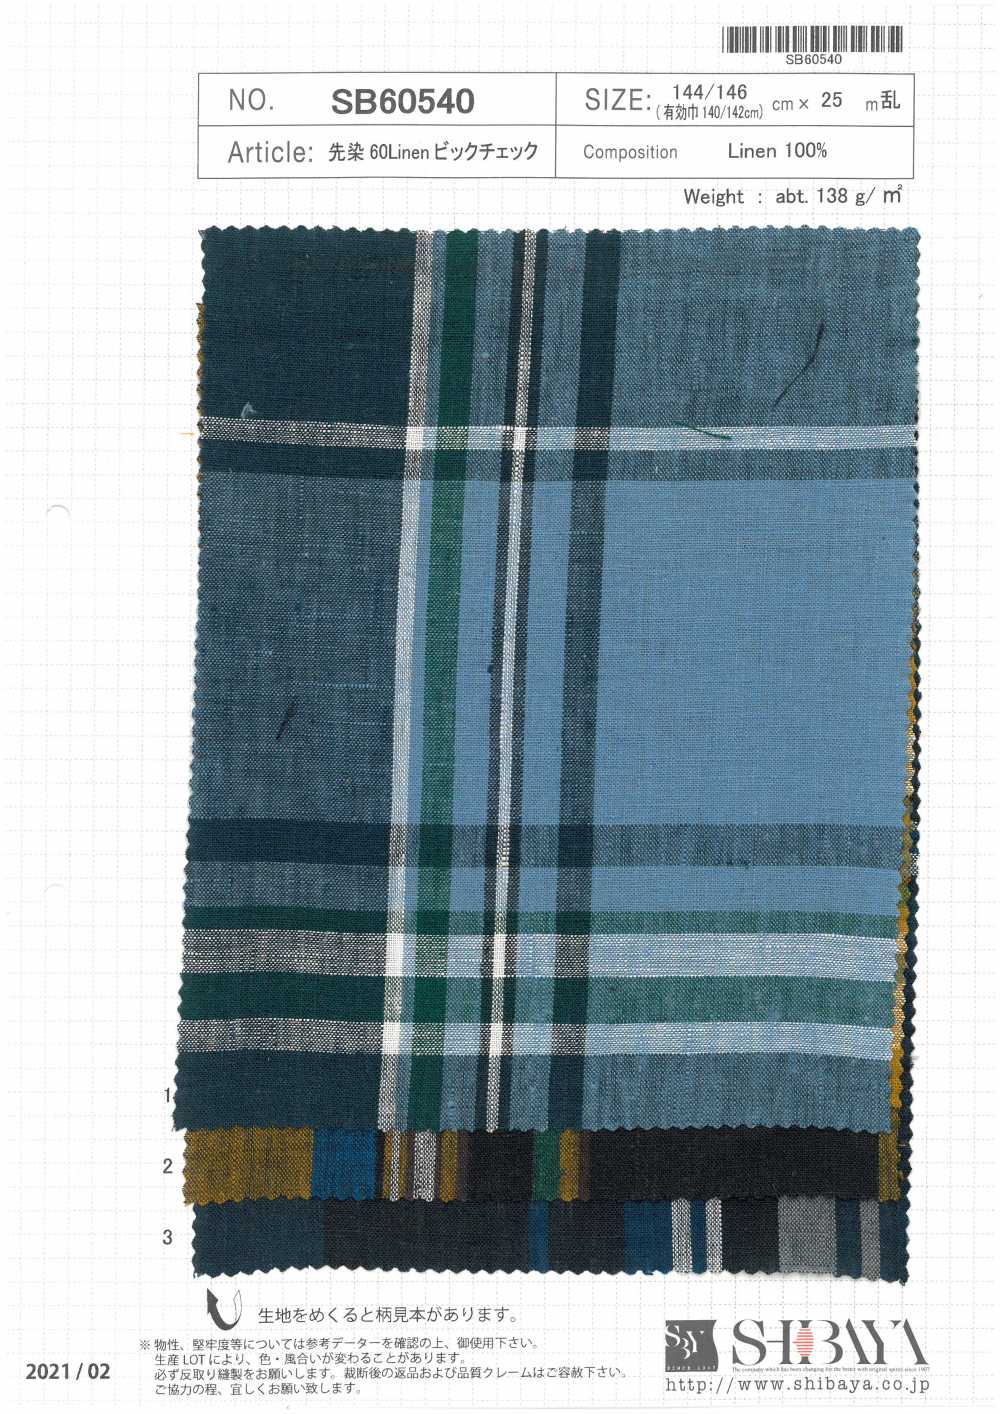 SB60540 Yarn Dyed 60Linen Big Check[Textile / Fabric] SHIBAYA